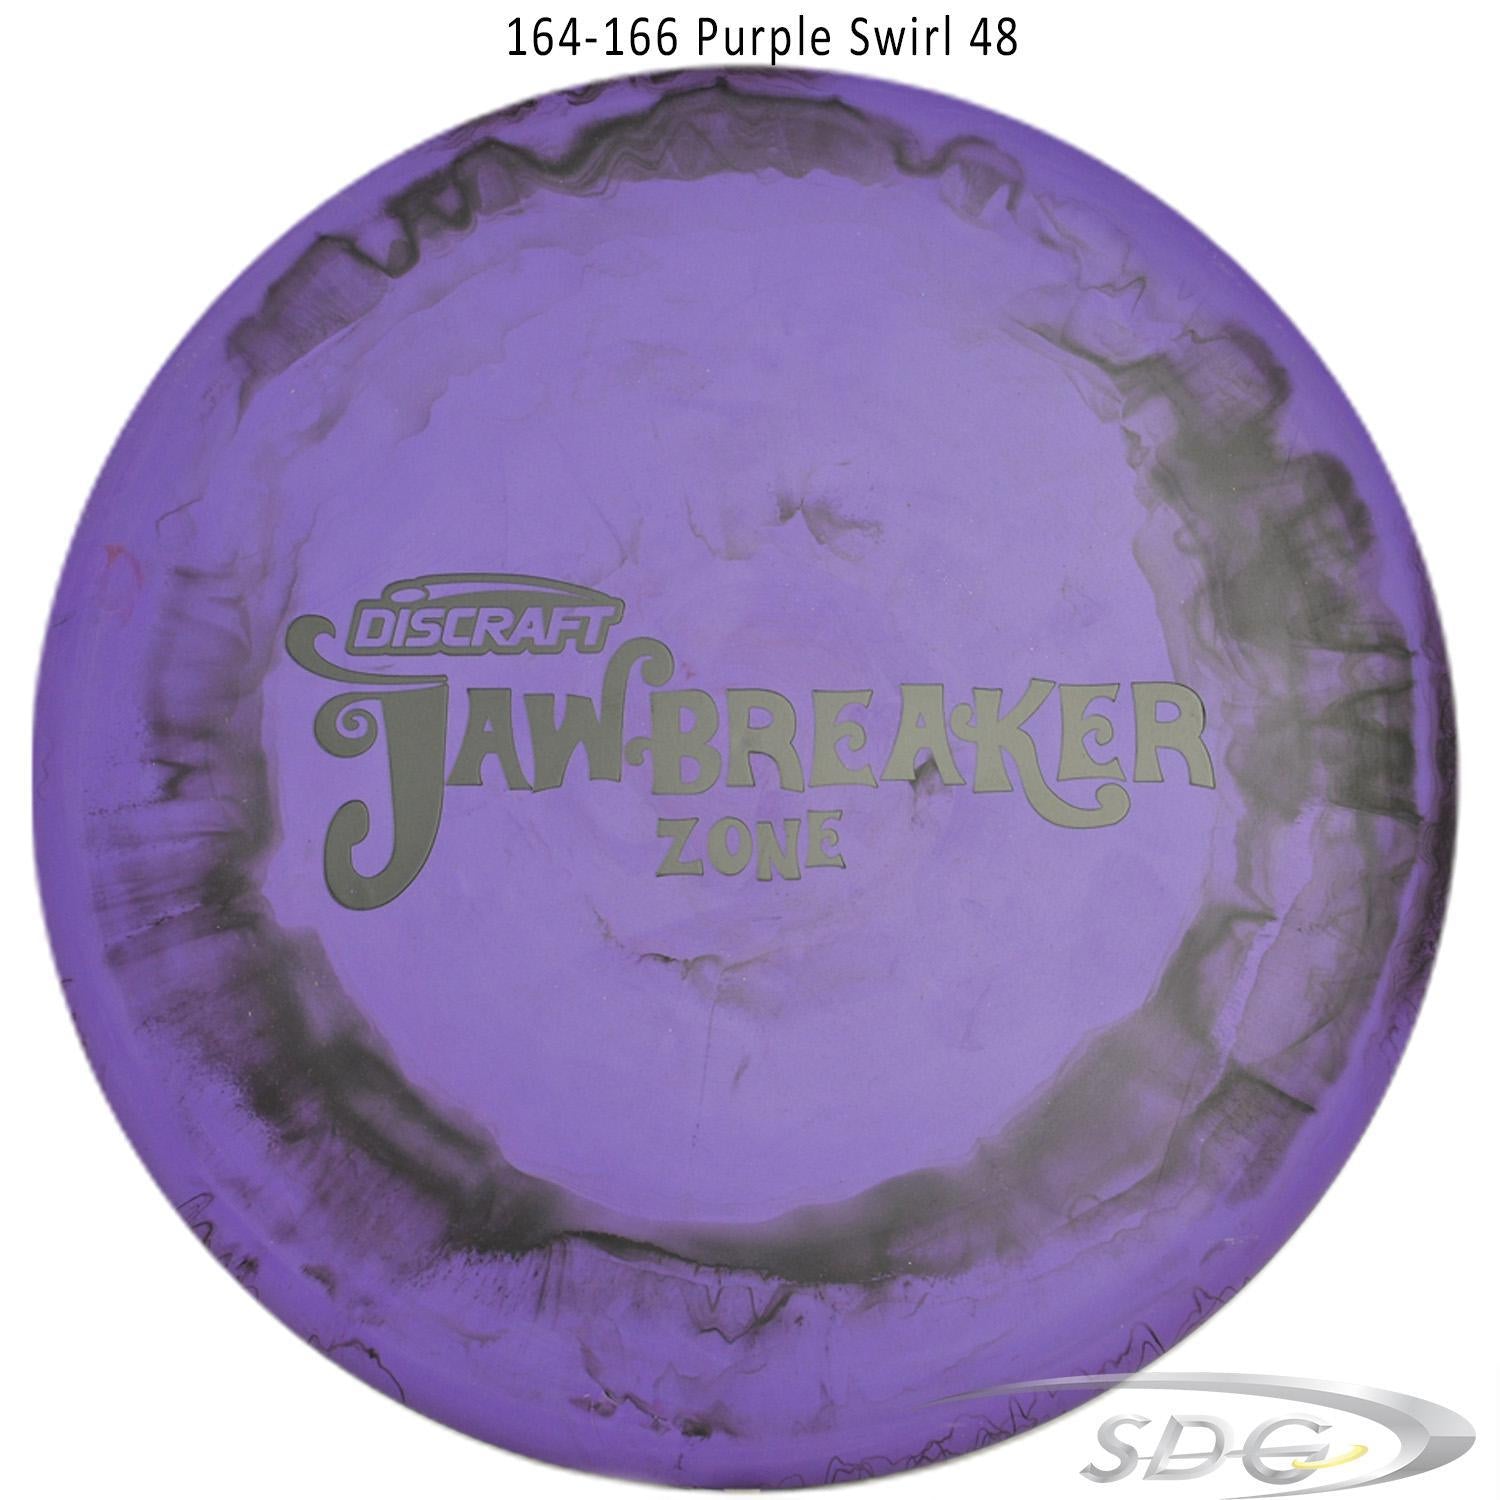 discraft-jawbreaker-zone-disc-golf-putter-169-160-weights 164-166 Purple Swirl 48 